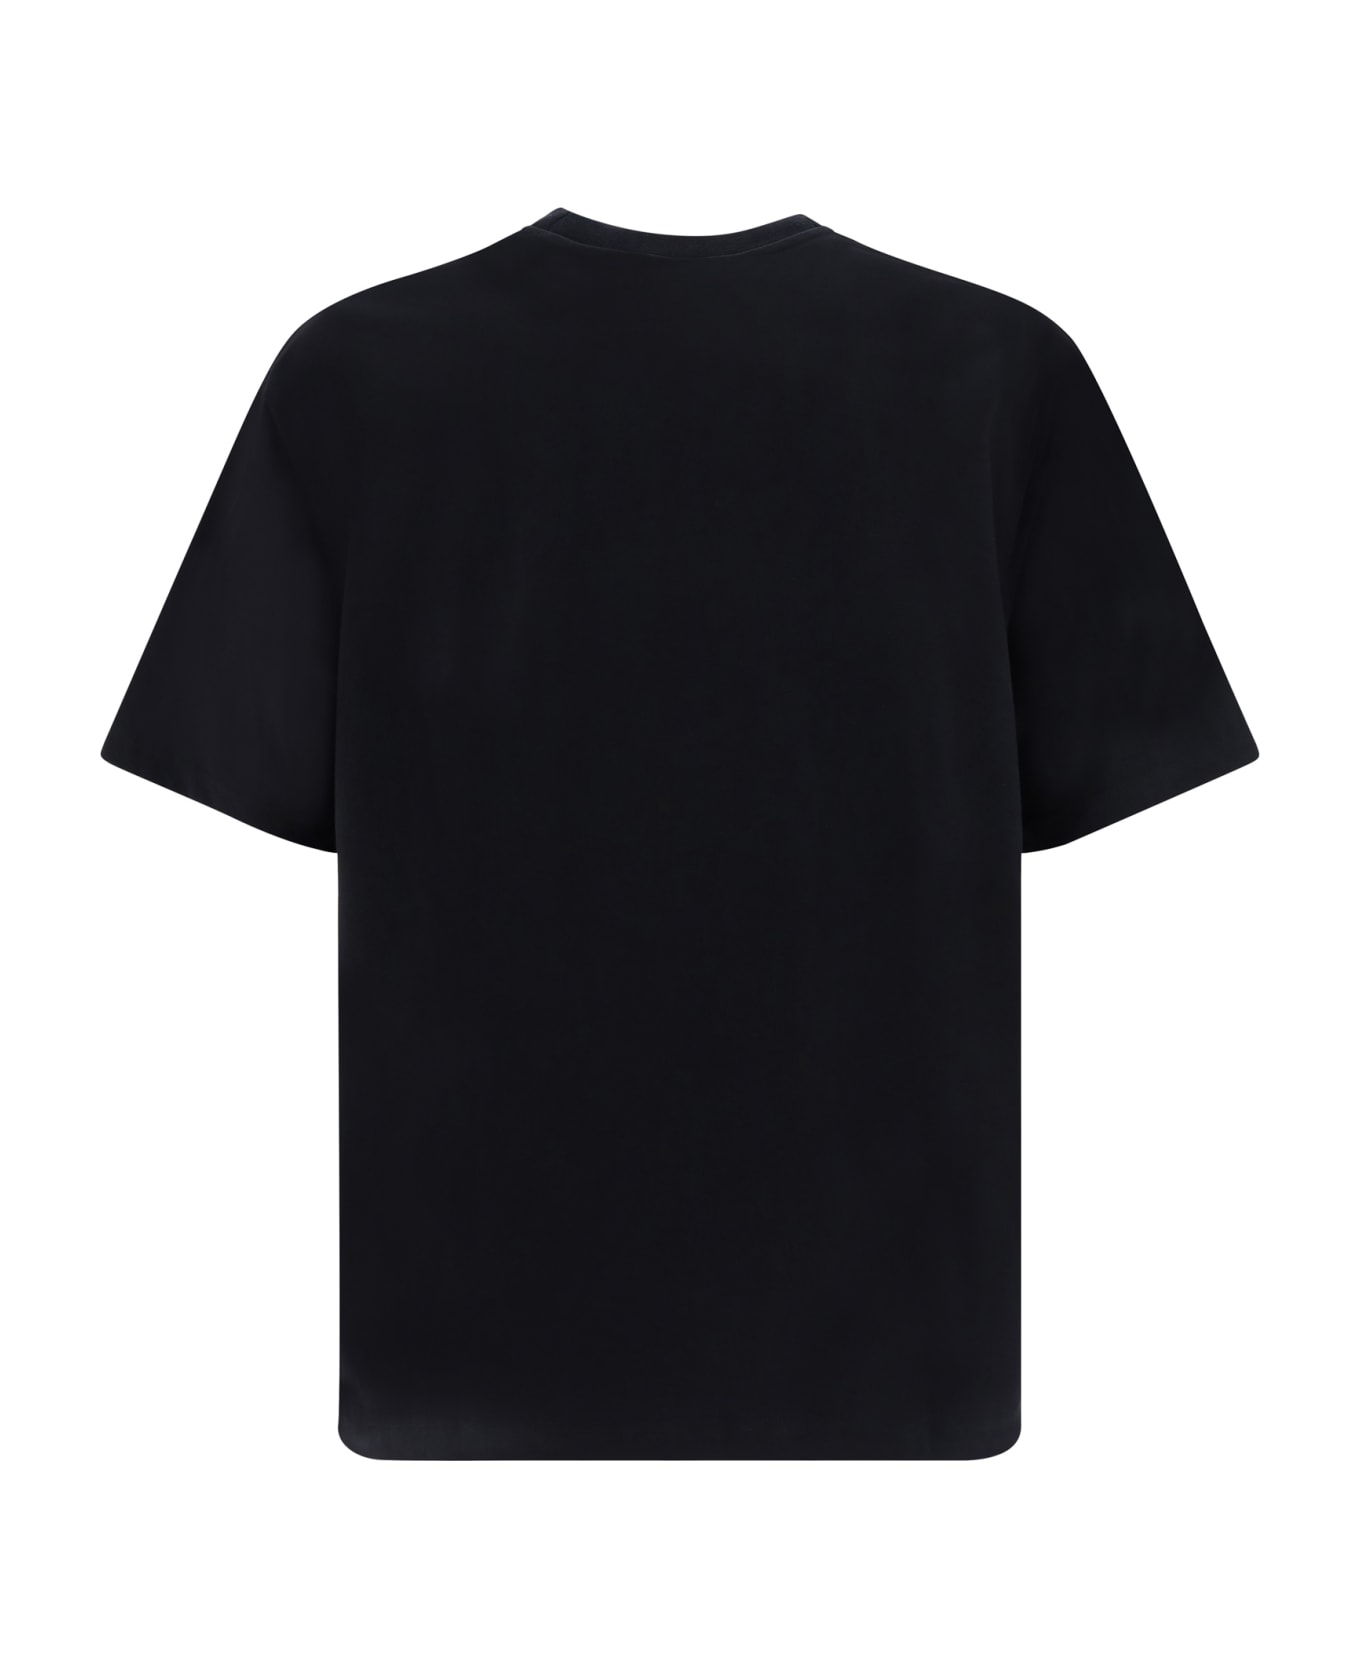 Acne Studios Logo Printed Crewneck T-shirt - Black